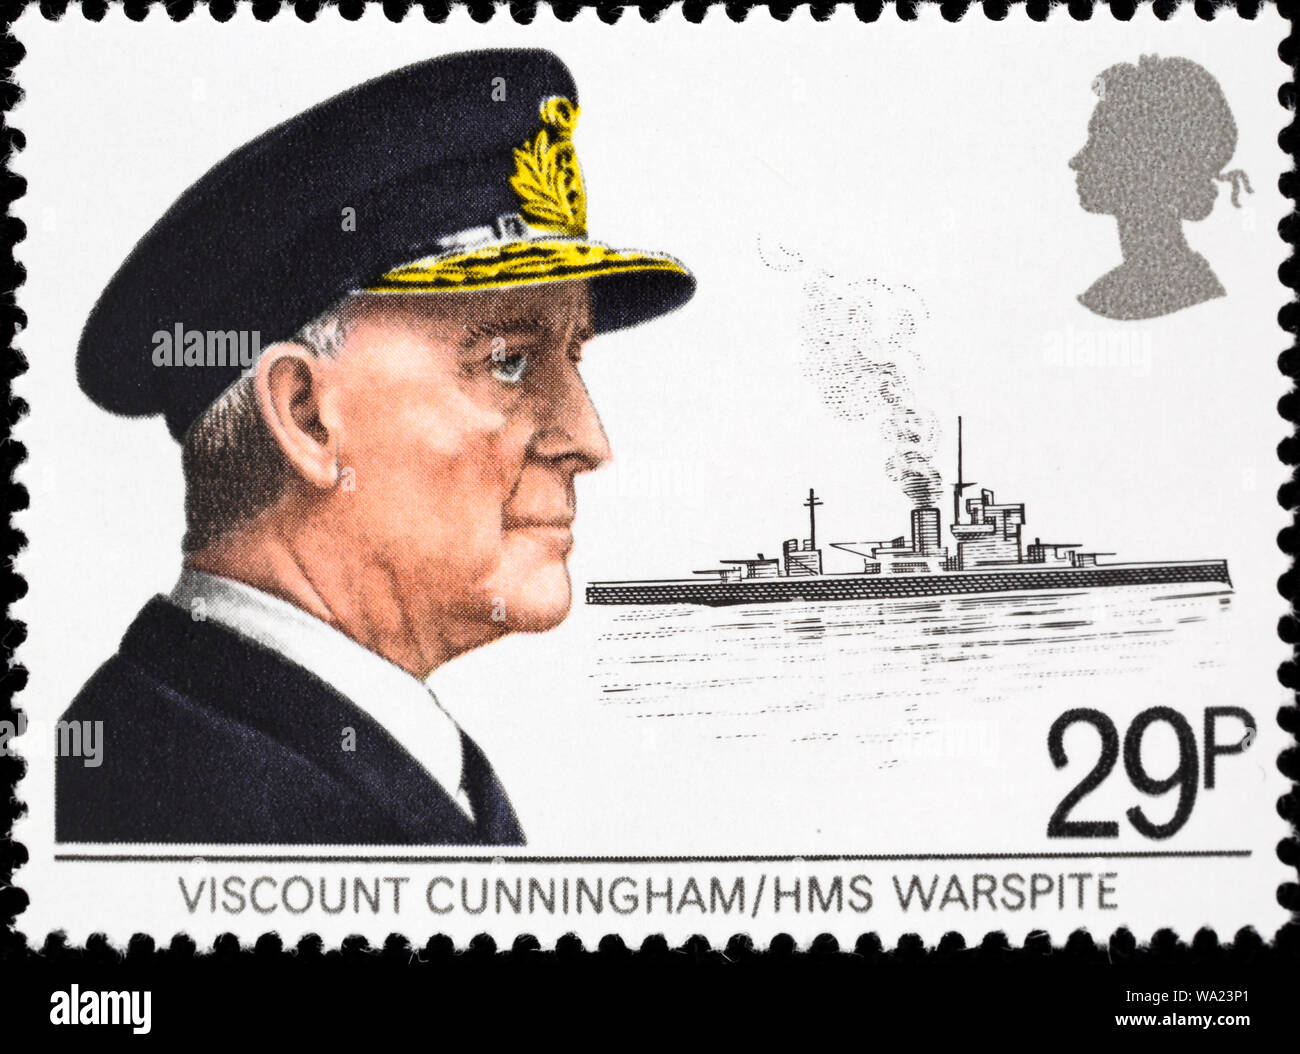 Viscount Andrew Cunningham (1883-1963), HMS Warspite, postage stamp, UK, 1982 Stock Photo